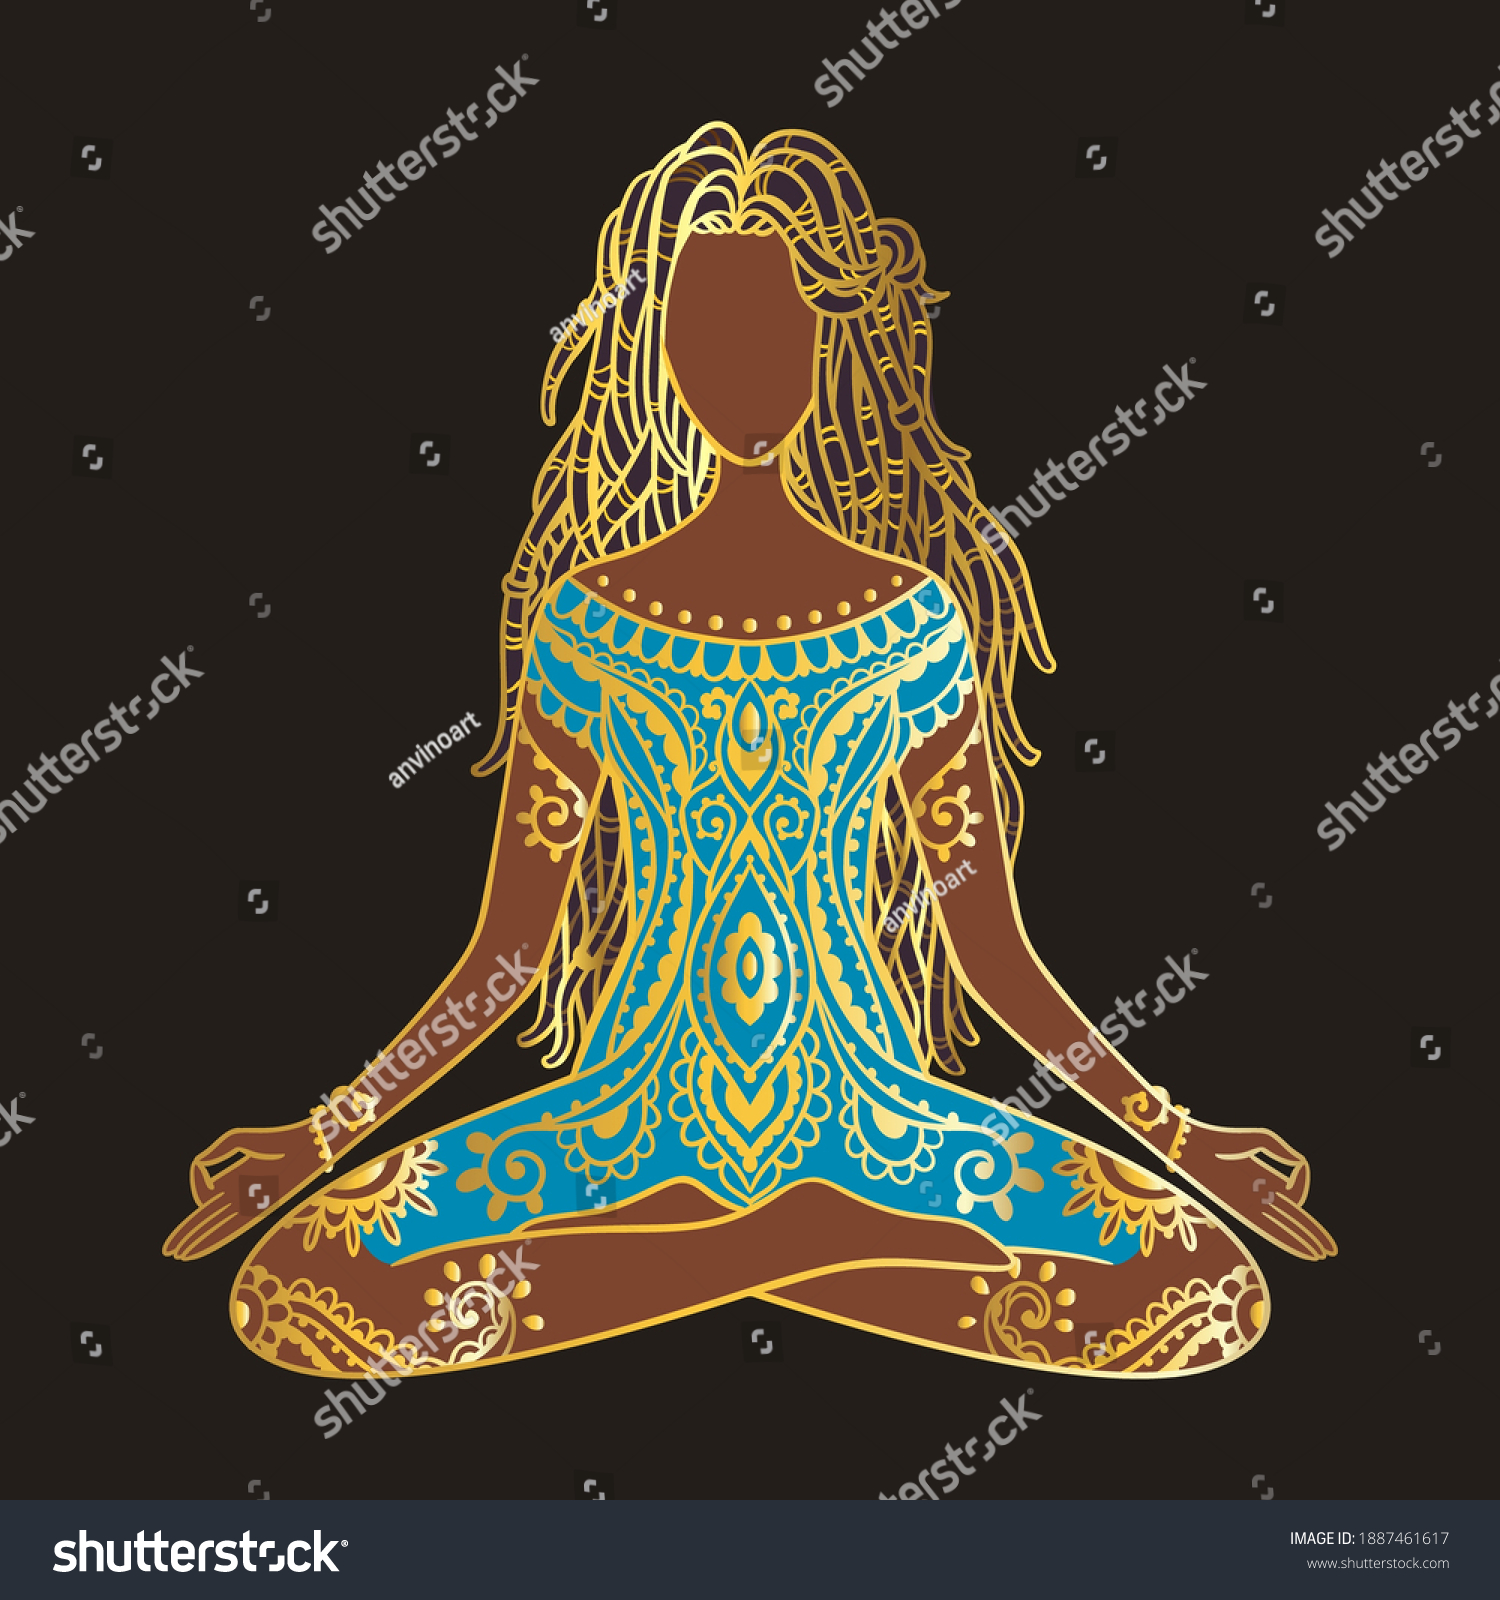 SVG of Yoga girl. african american woman doing yoga. Dreadlocks hairstyle
Ornament Meditation pose. India ethnic vector illustration style Yoga pose
 svg